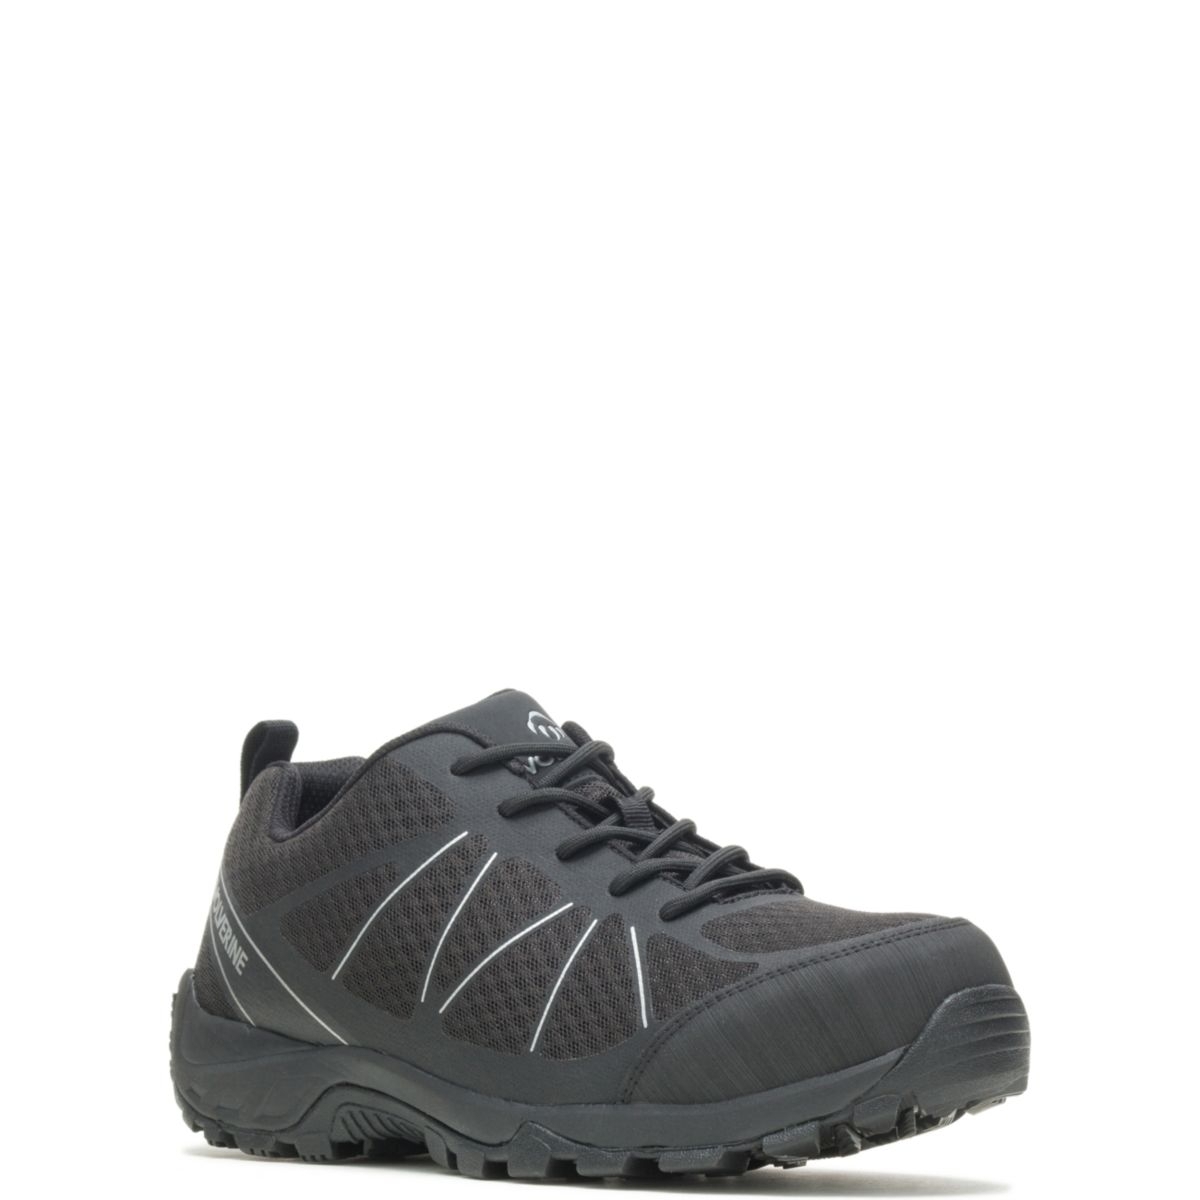 WOLVERINE Men's Amherst II CarbonMAXÂ® Composite Toe Work Shoe Black - W201147 BLACK - BLACK, 9.5 X-Wide